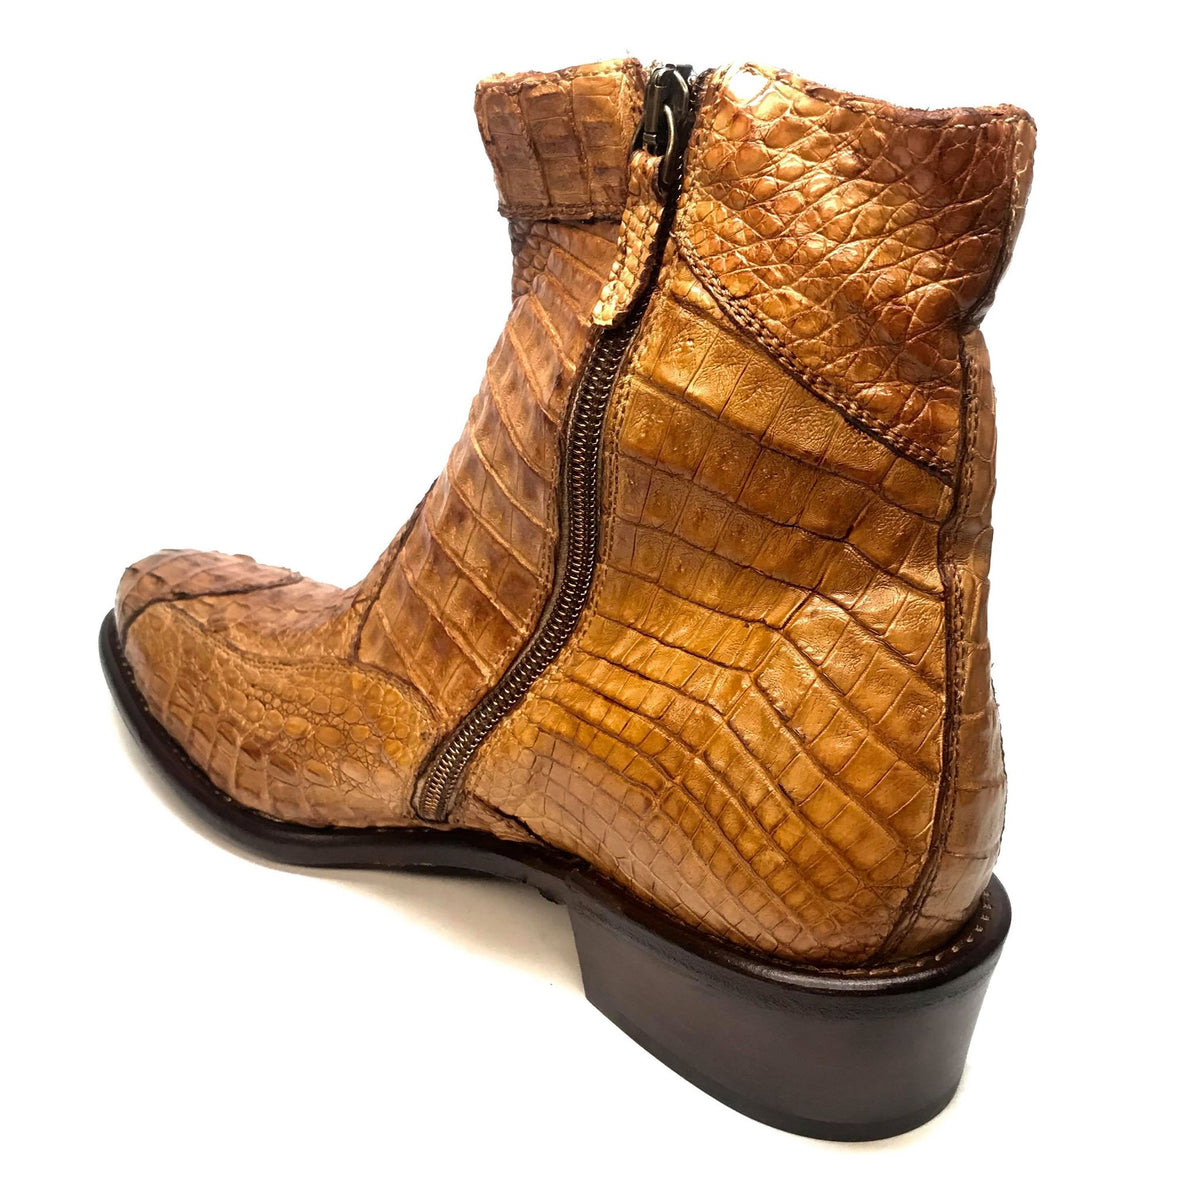 Calzoleria Toscana Cognac Hornback Alligator Ankle Boots - Dudes Boutique